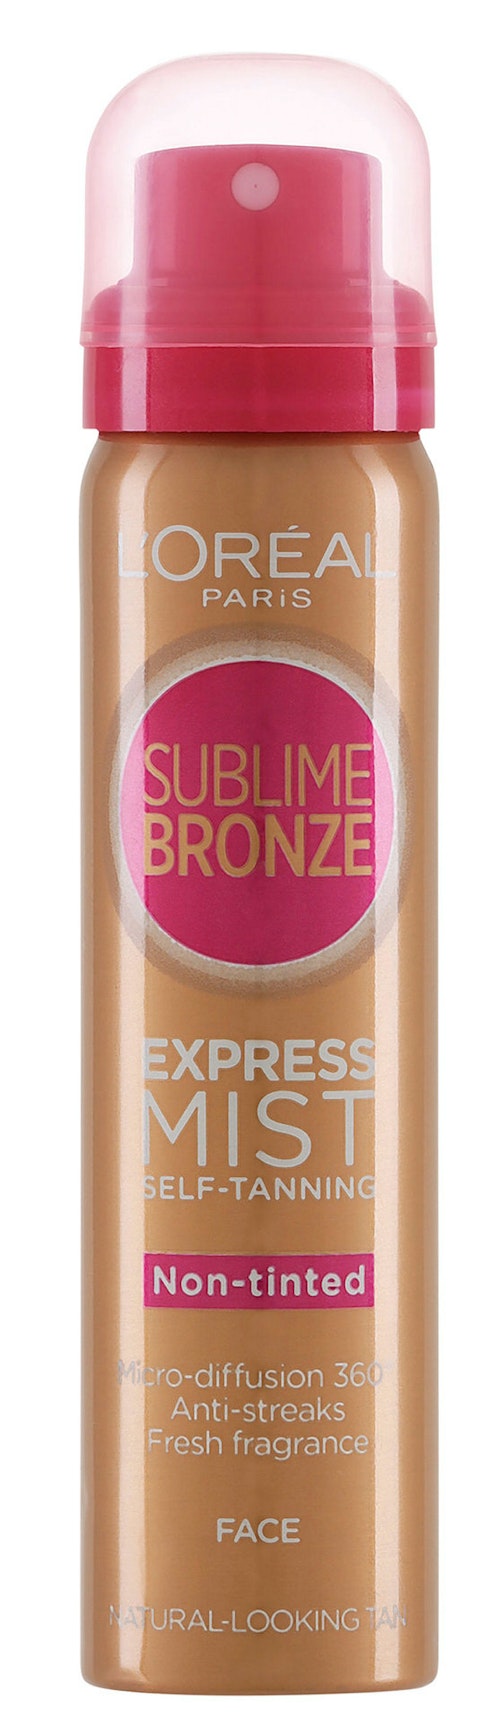 L'Oreal Sublime Bronze Self-Tan Express ProFace